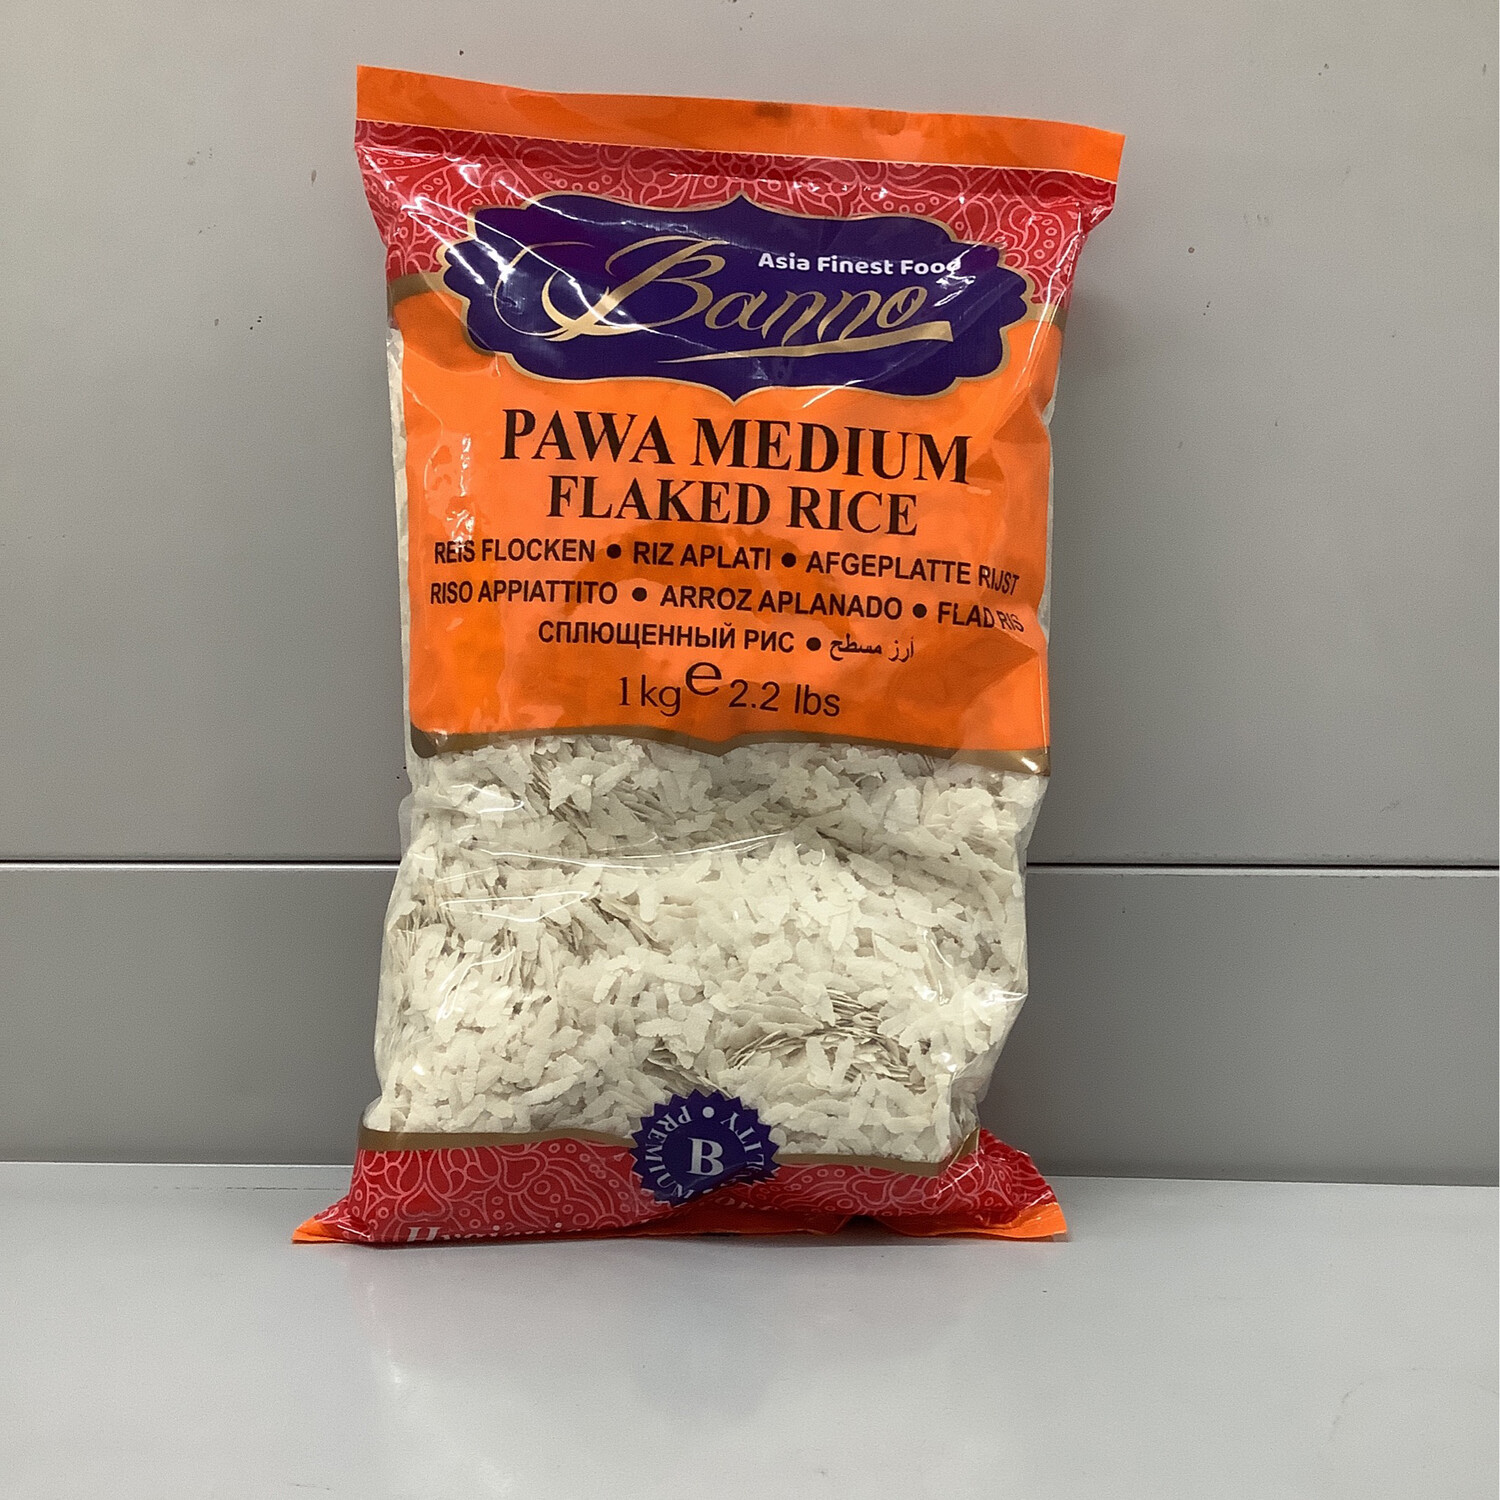 Banno Pawa Medium Flaked Rice 1kg